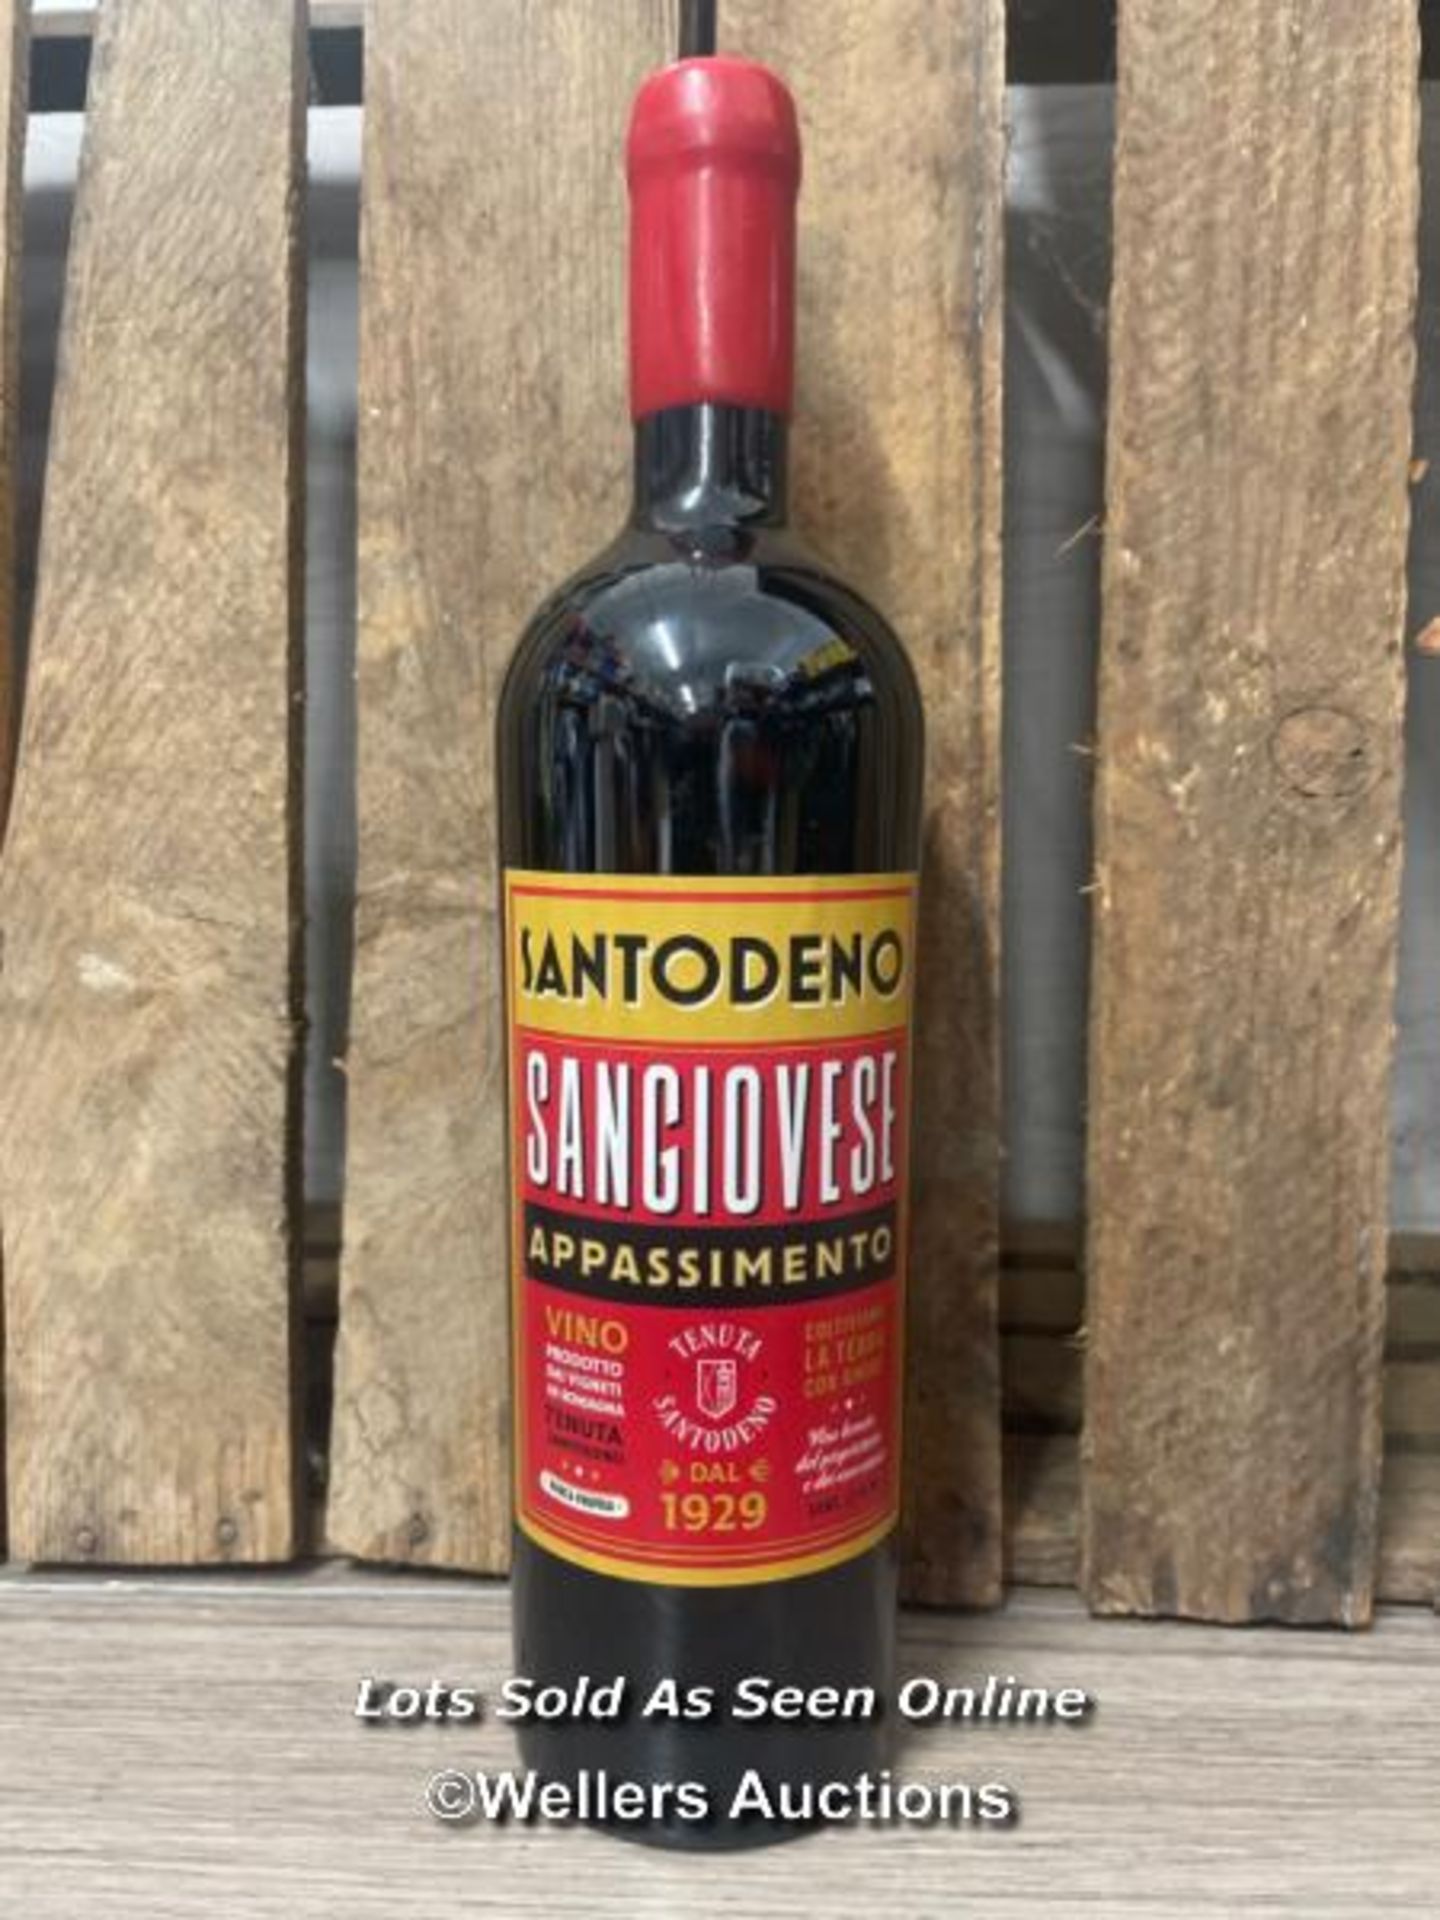 SANTODENO SANGIOVESE APPASSIMENTO RED WINE 2019, 14% VOL, 750ML